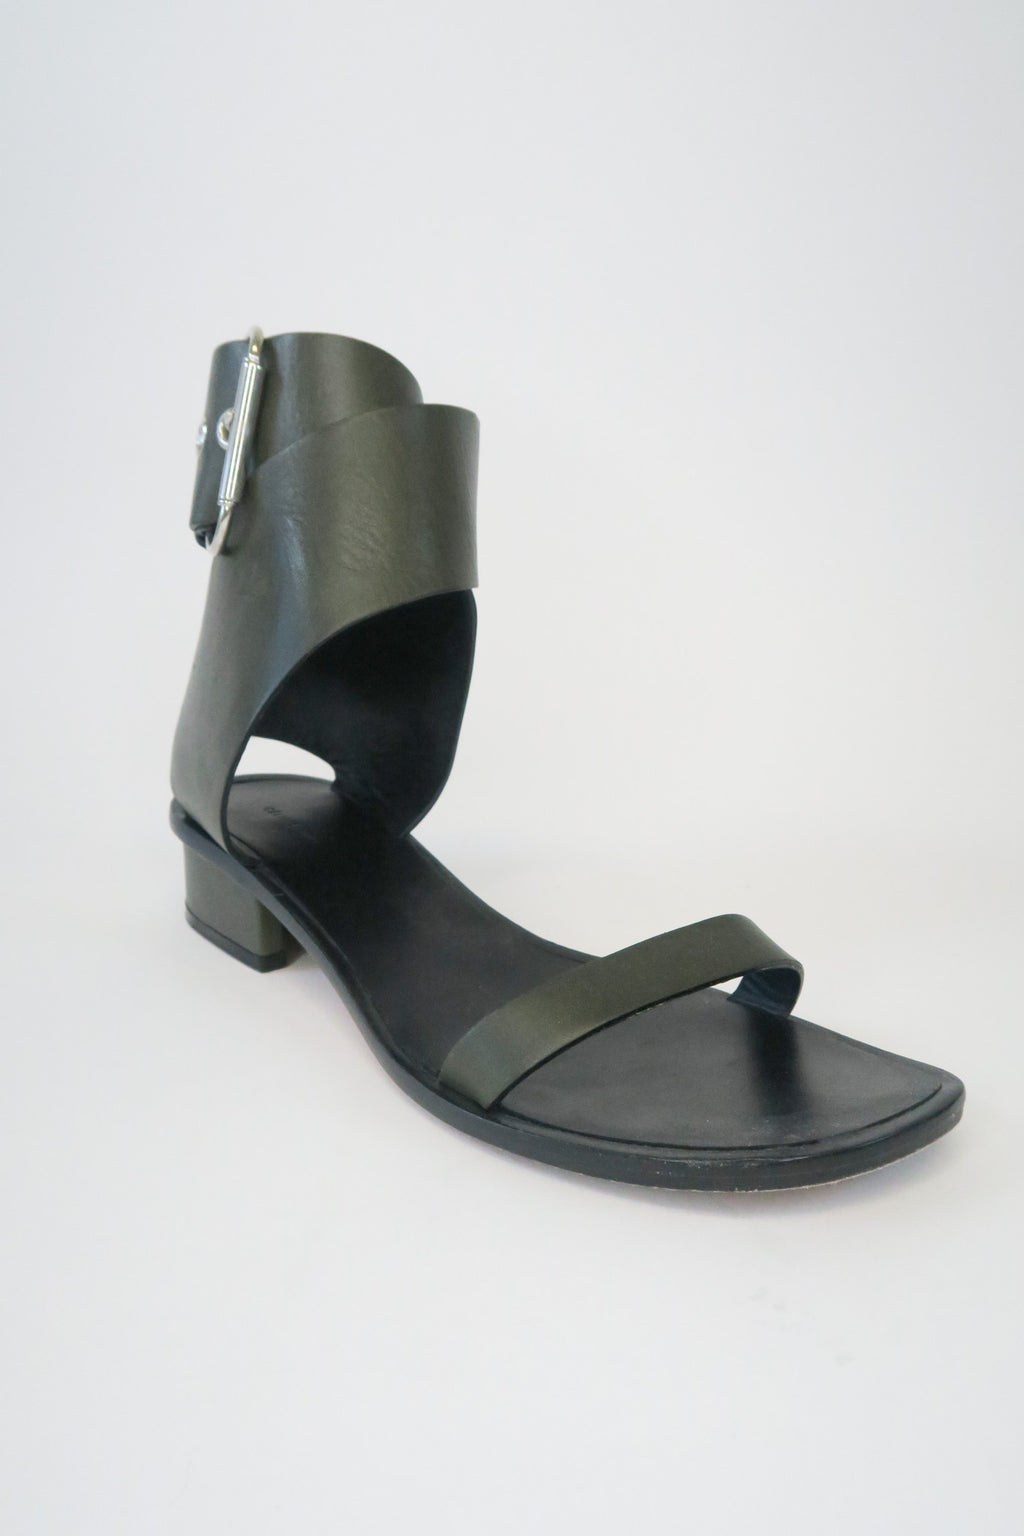 Celine Leather Gladiator Sandals sz 38